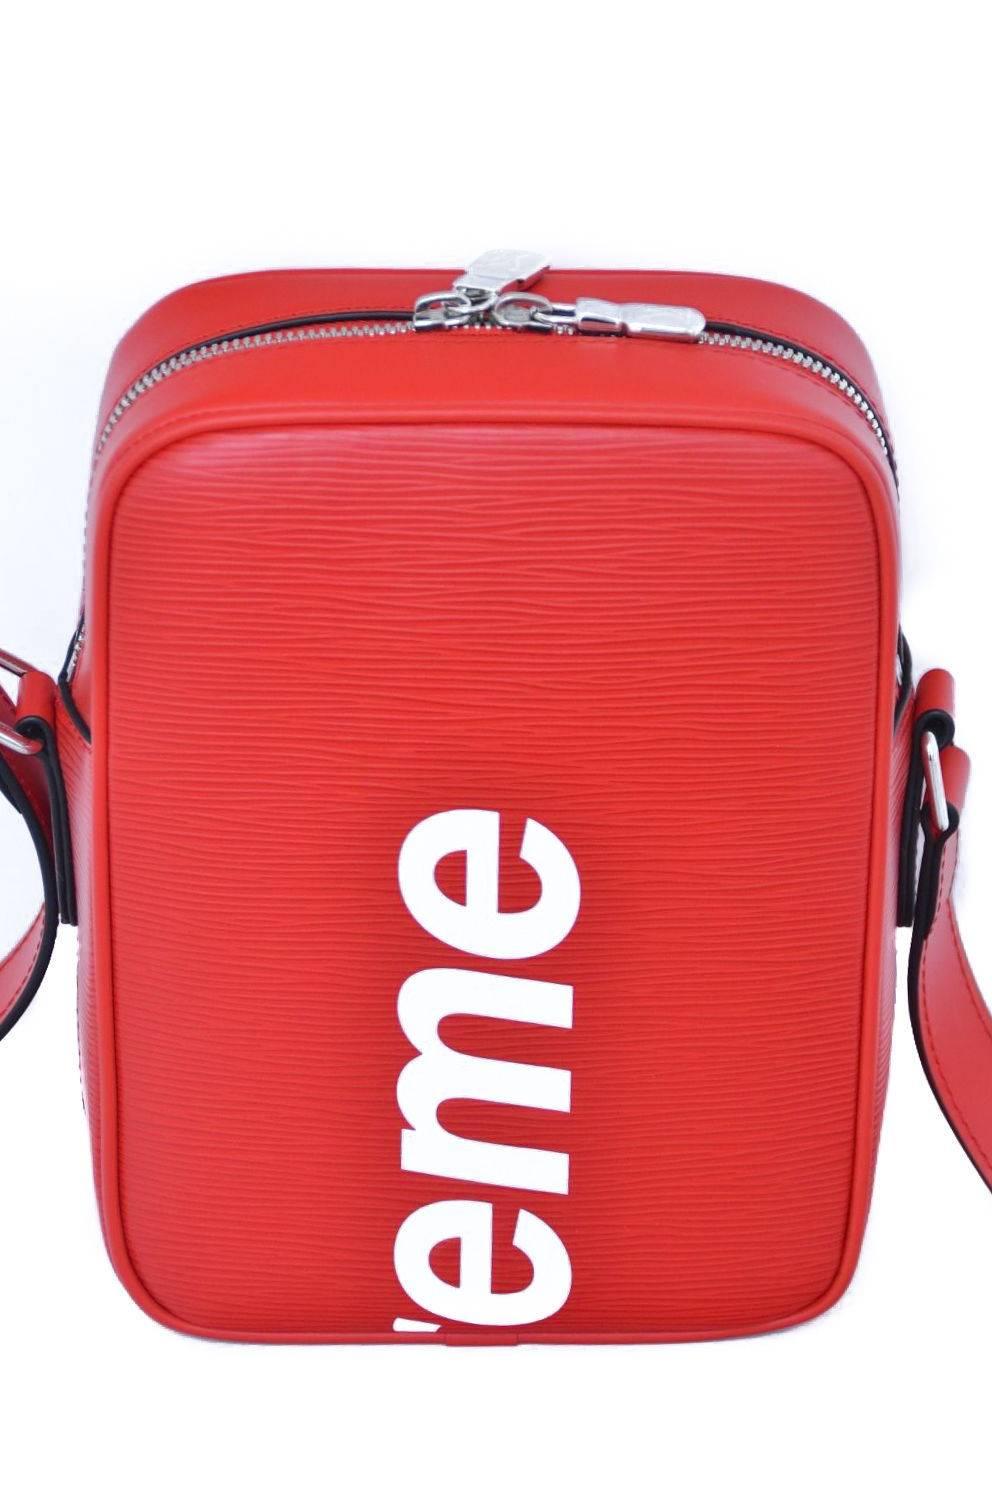 Women's or Men's Supreme Louis Vuitton Red Shoulder Bag Danube RARE Pop-Up Exclusive NEW